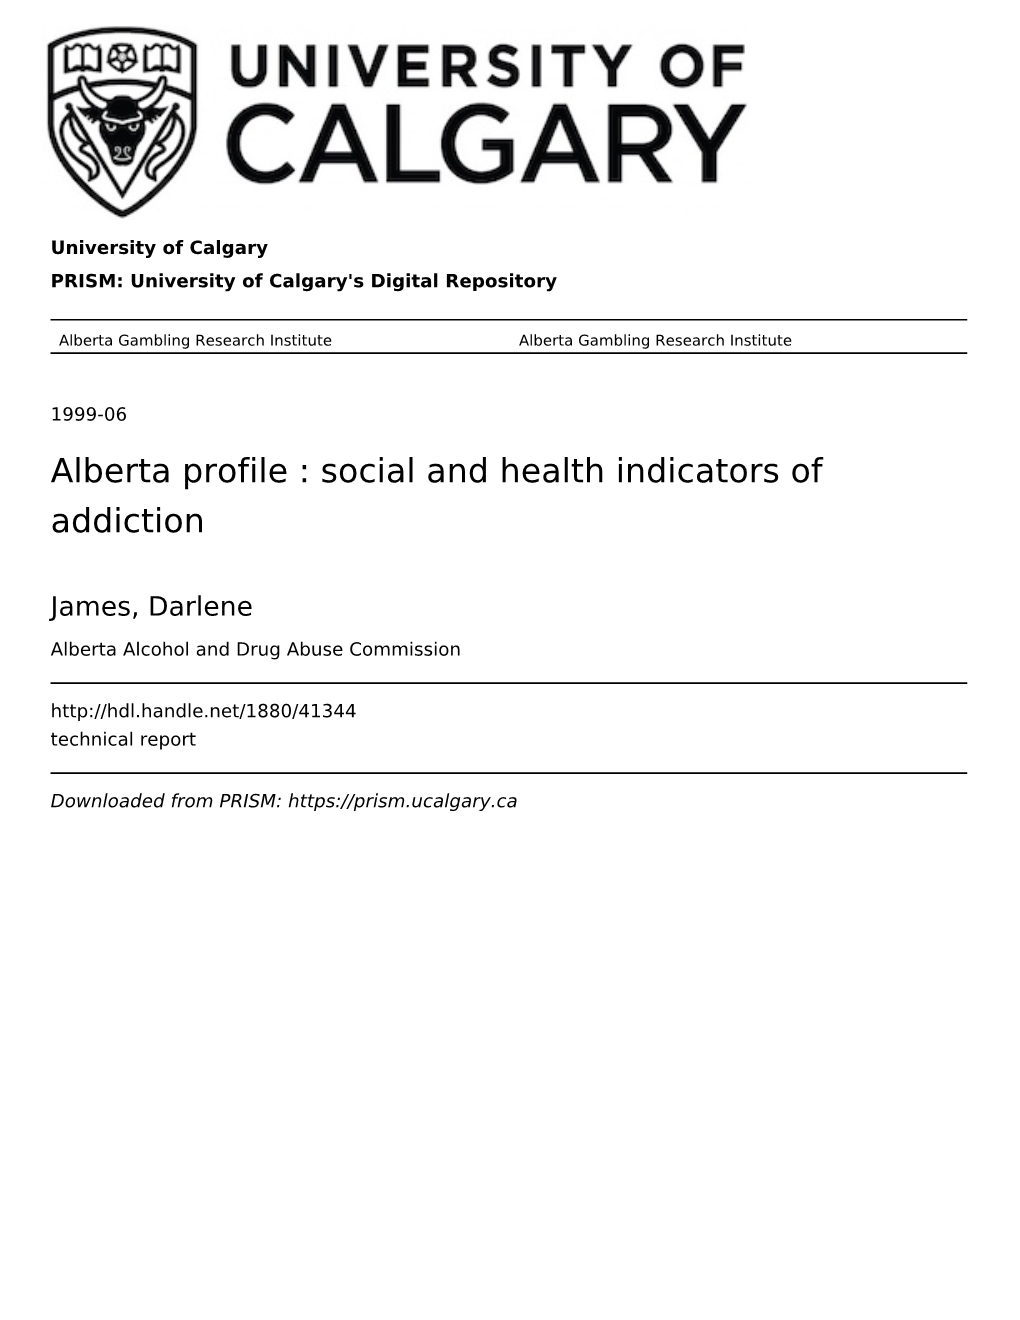 Alberta Profile : Social and Health Indicators of Addiction